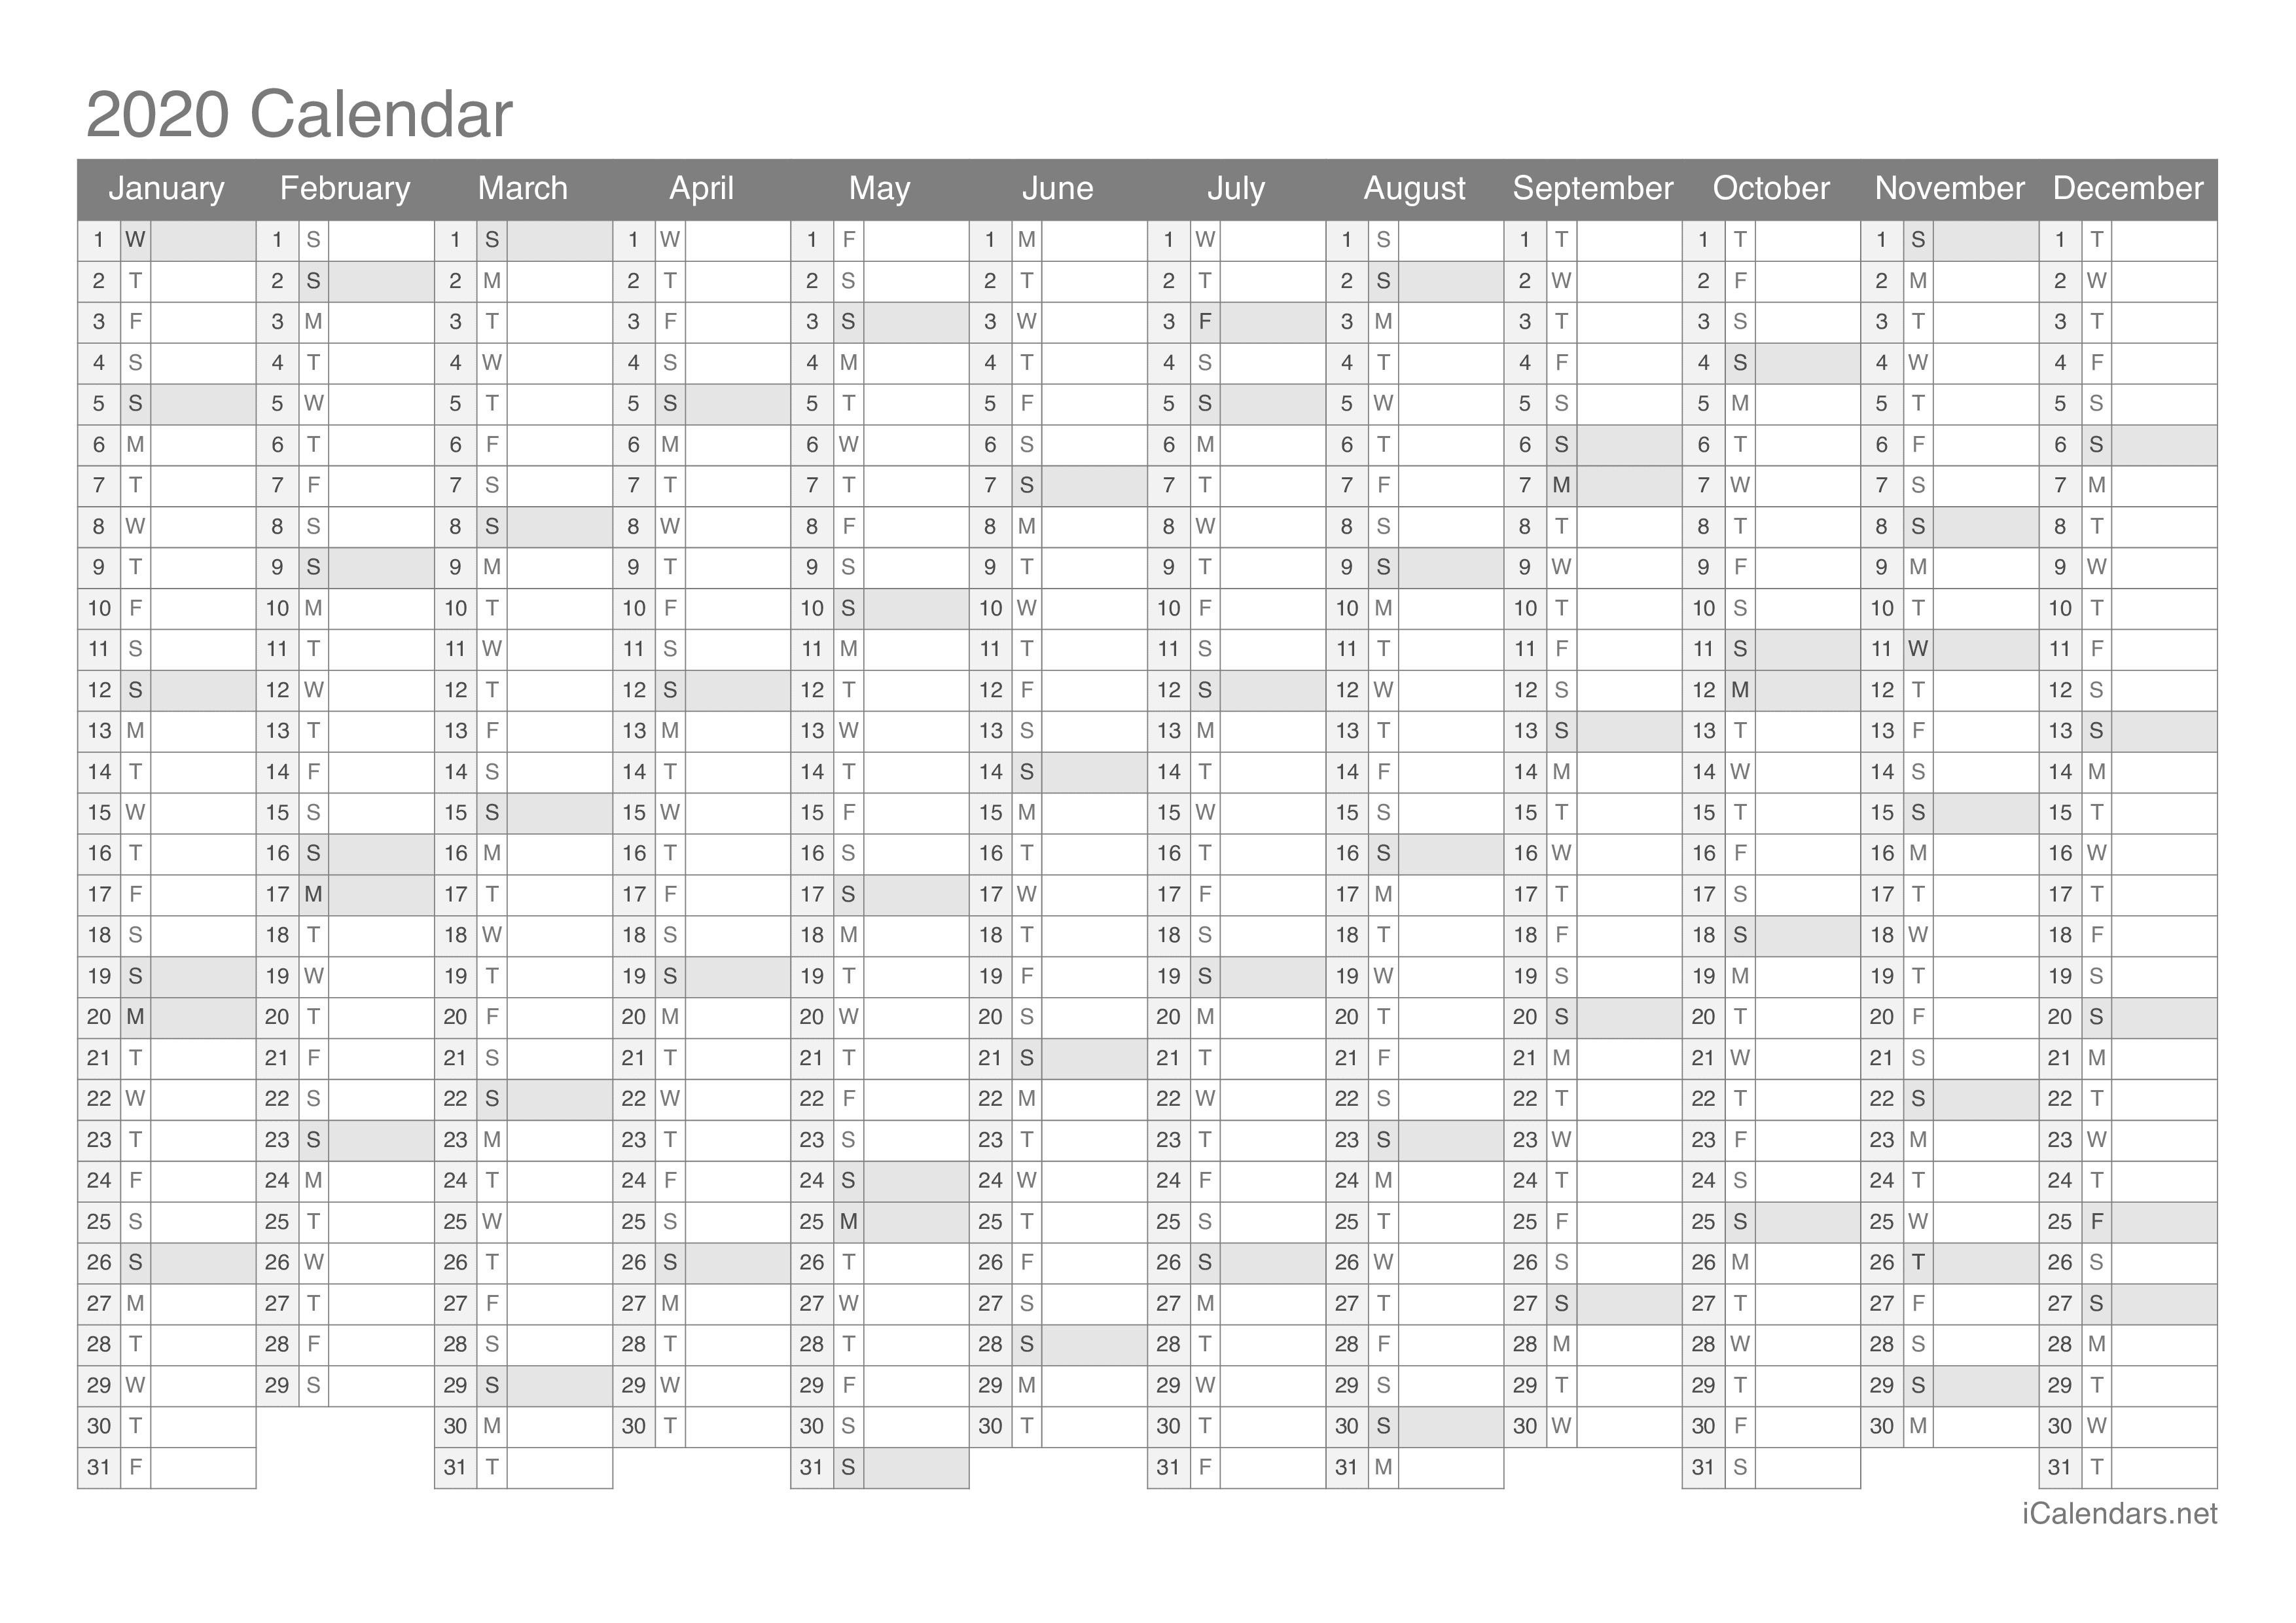 2020 Printable Calendar - or - icalendars.net